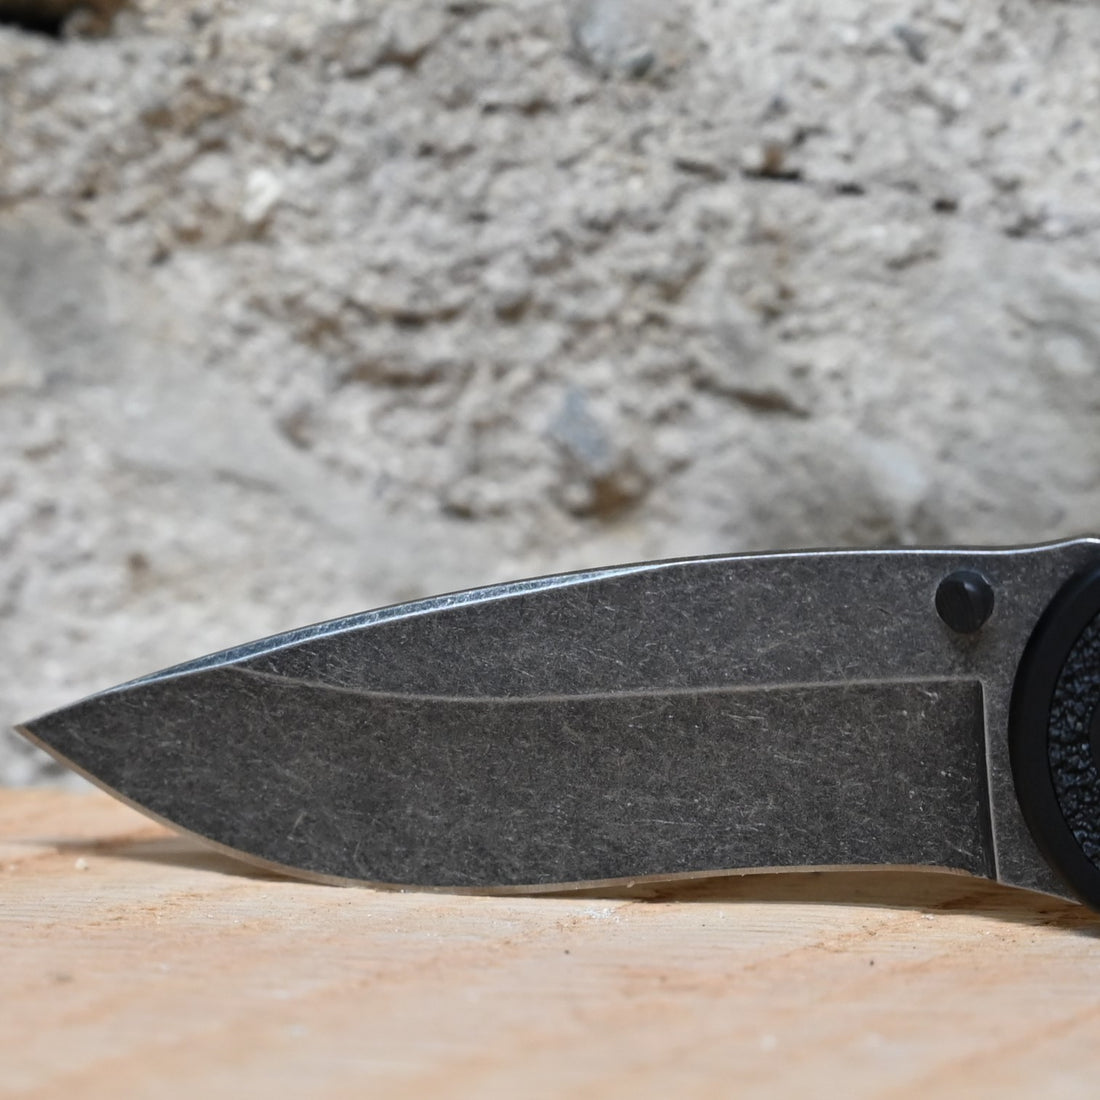 Kershaw Blur Knife in Aluminum Black view of blade